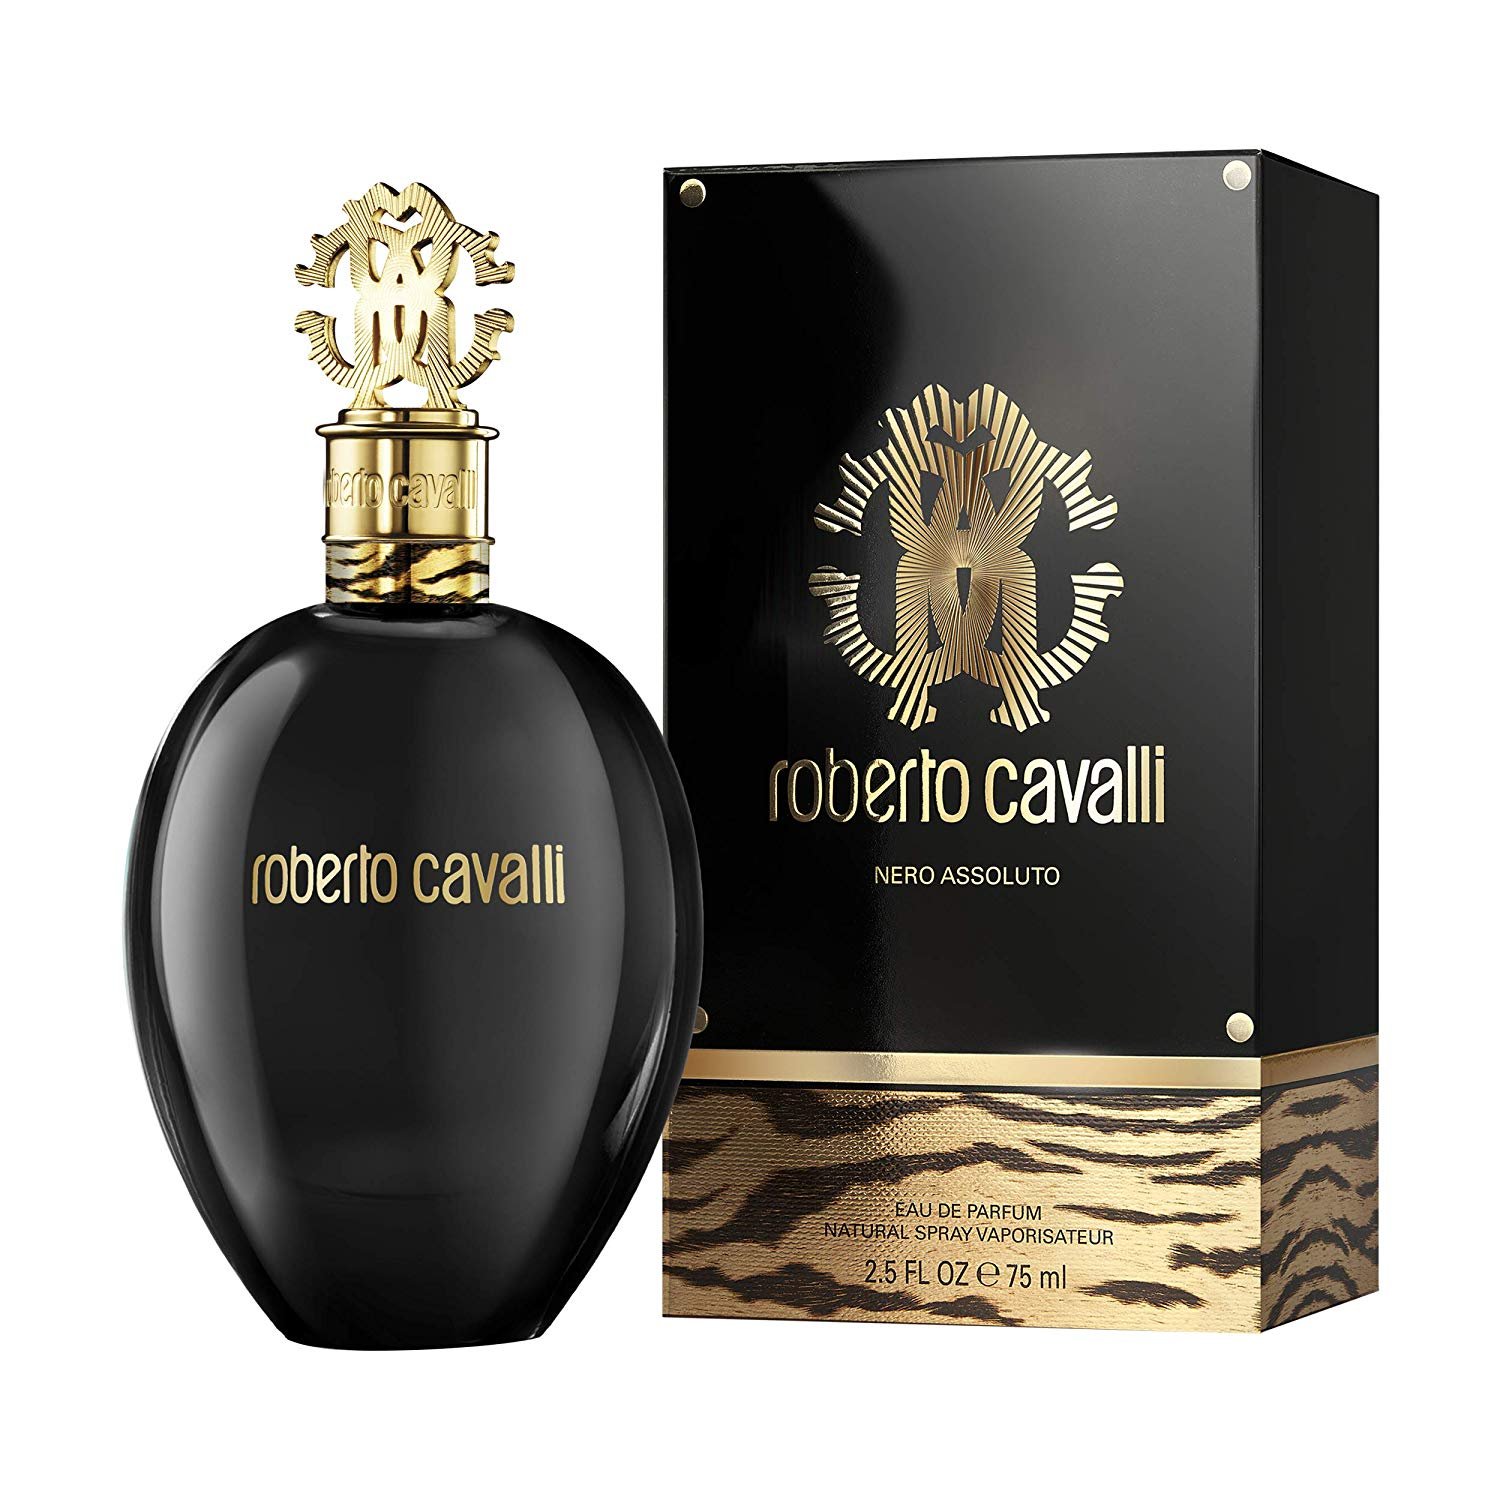 Planet Perfume - Roberto Cavalli Nero Assoluto : Super Deals